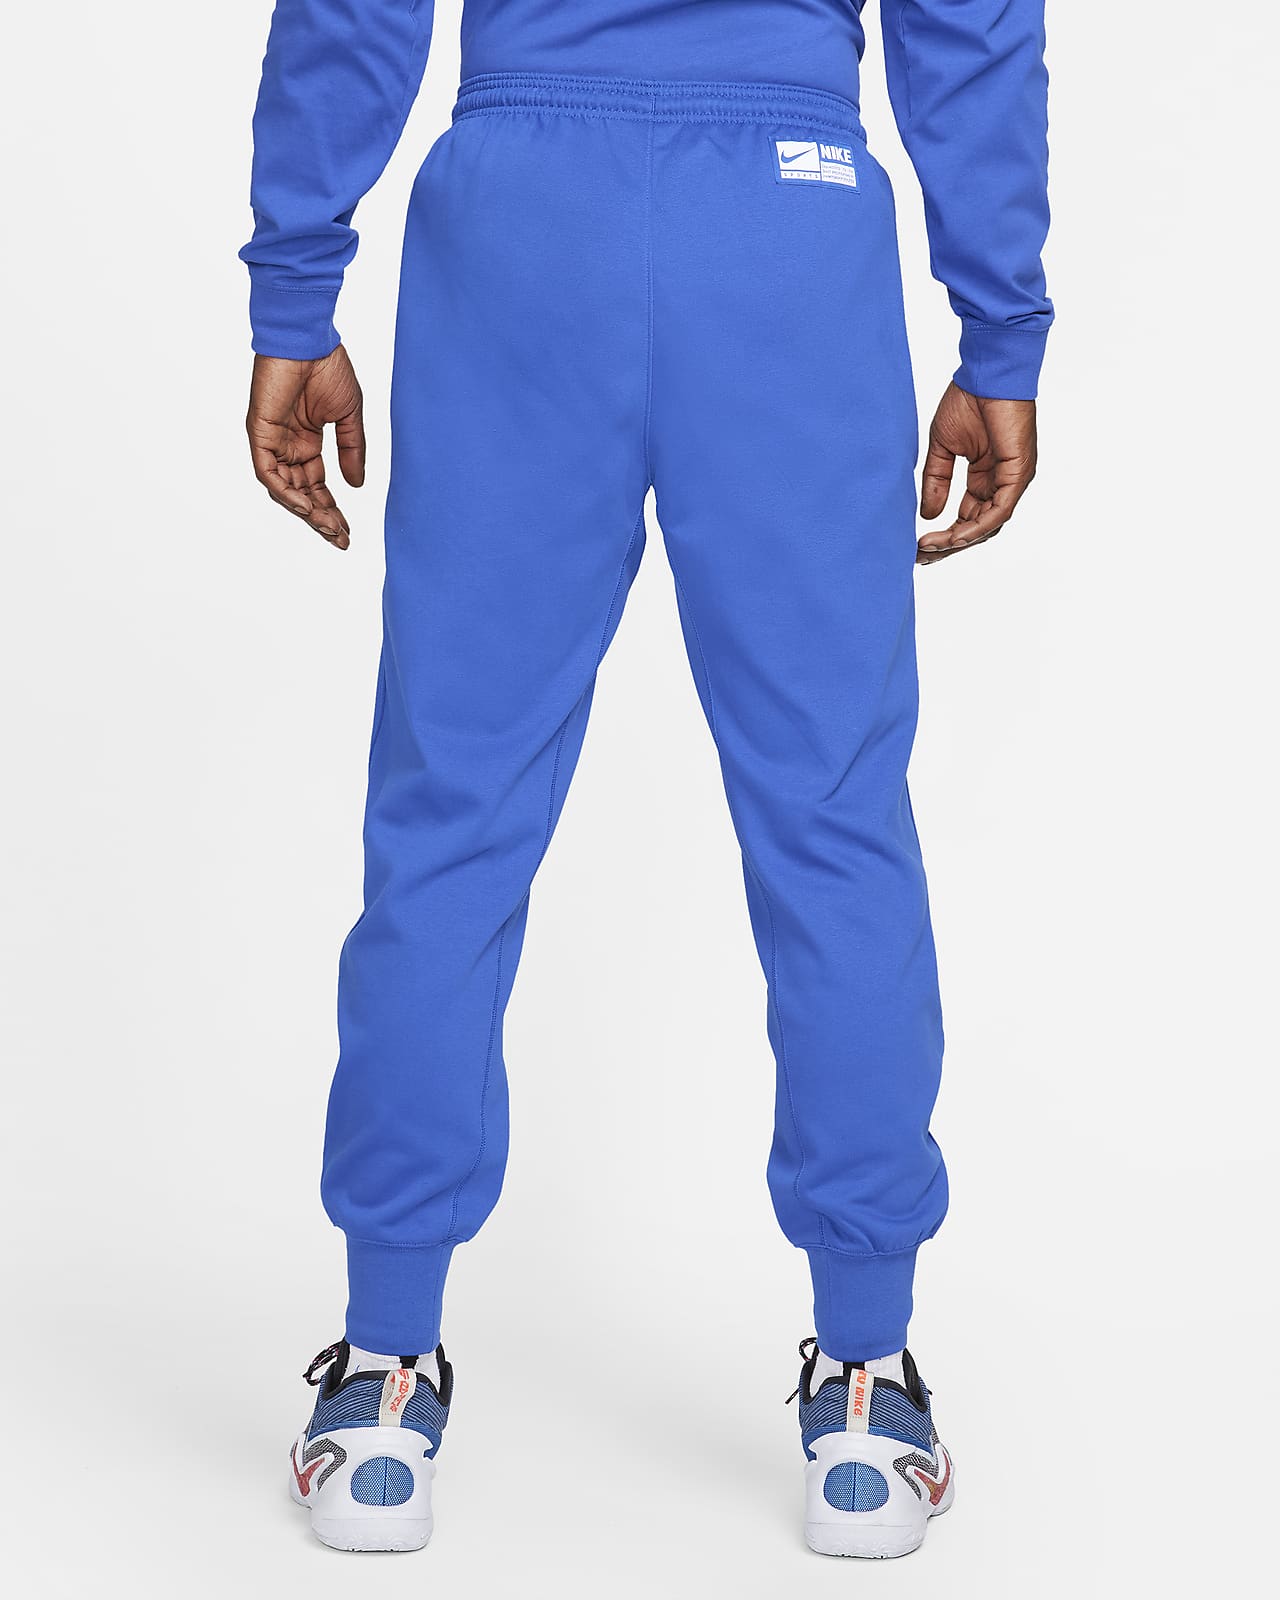 Nike Dri-FIT Standard Issue Men's Cuffed Basketball Trousers. Nike NO